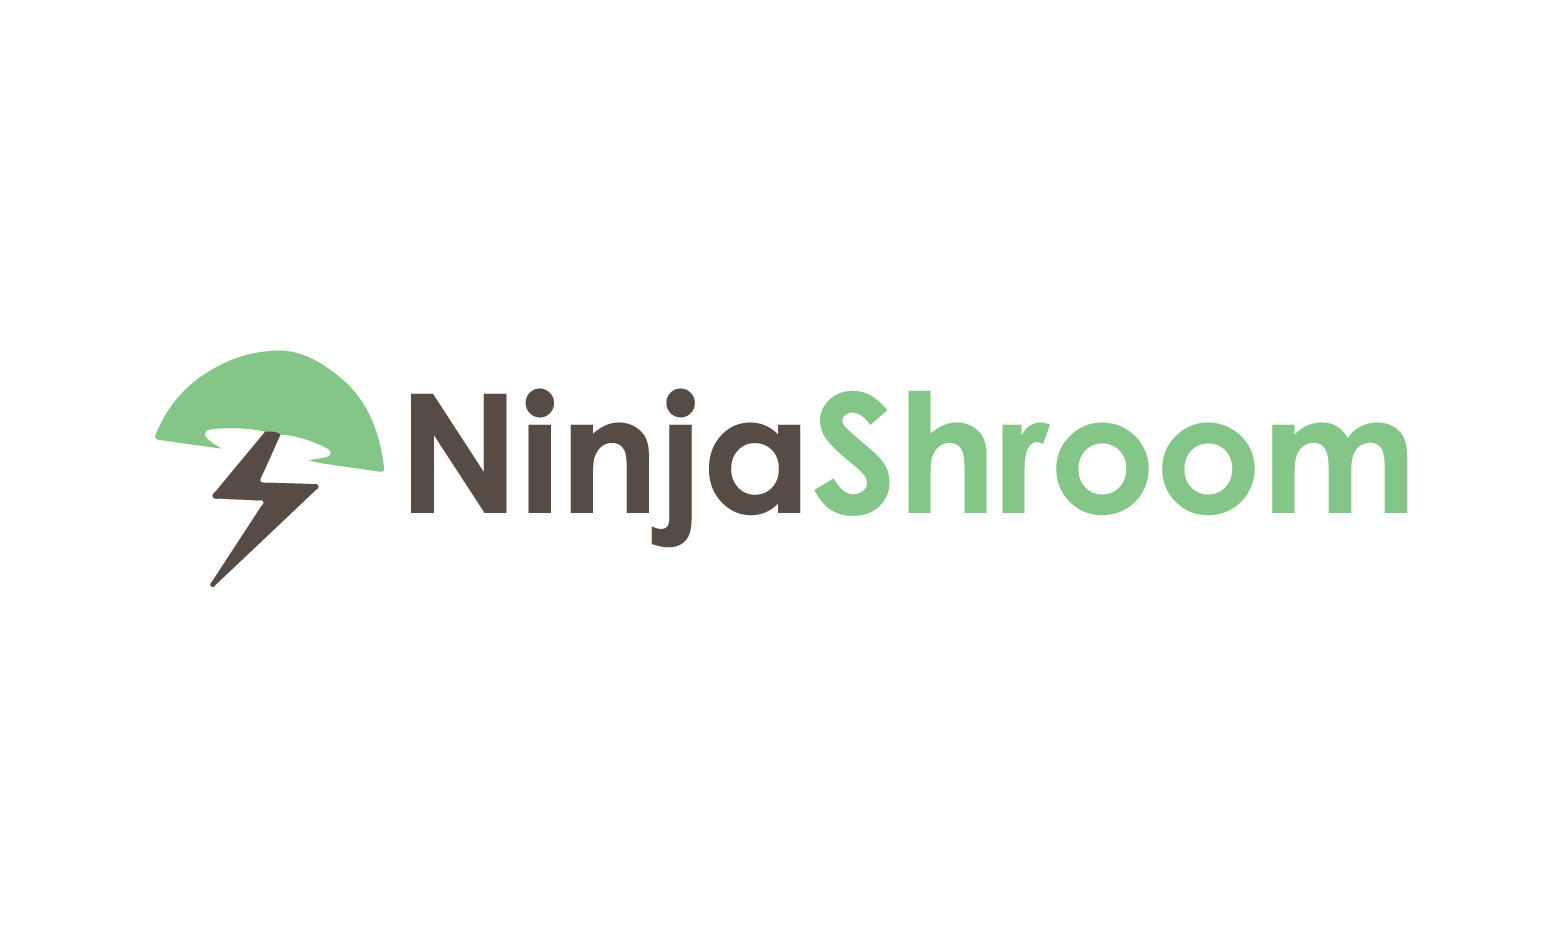 NinjaShroom.com - Creative brandable domain for sale